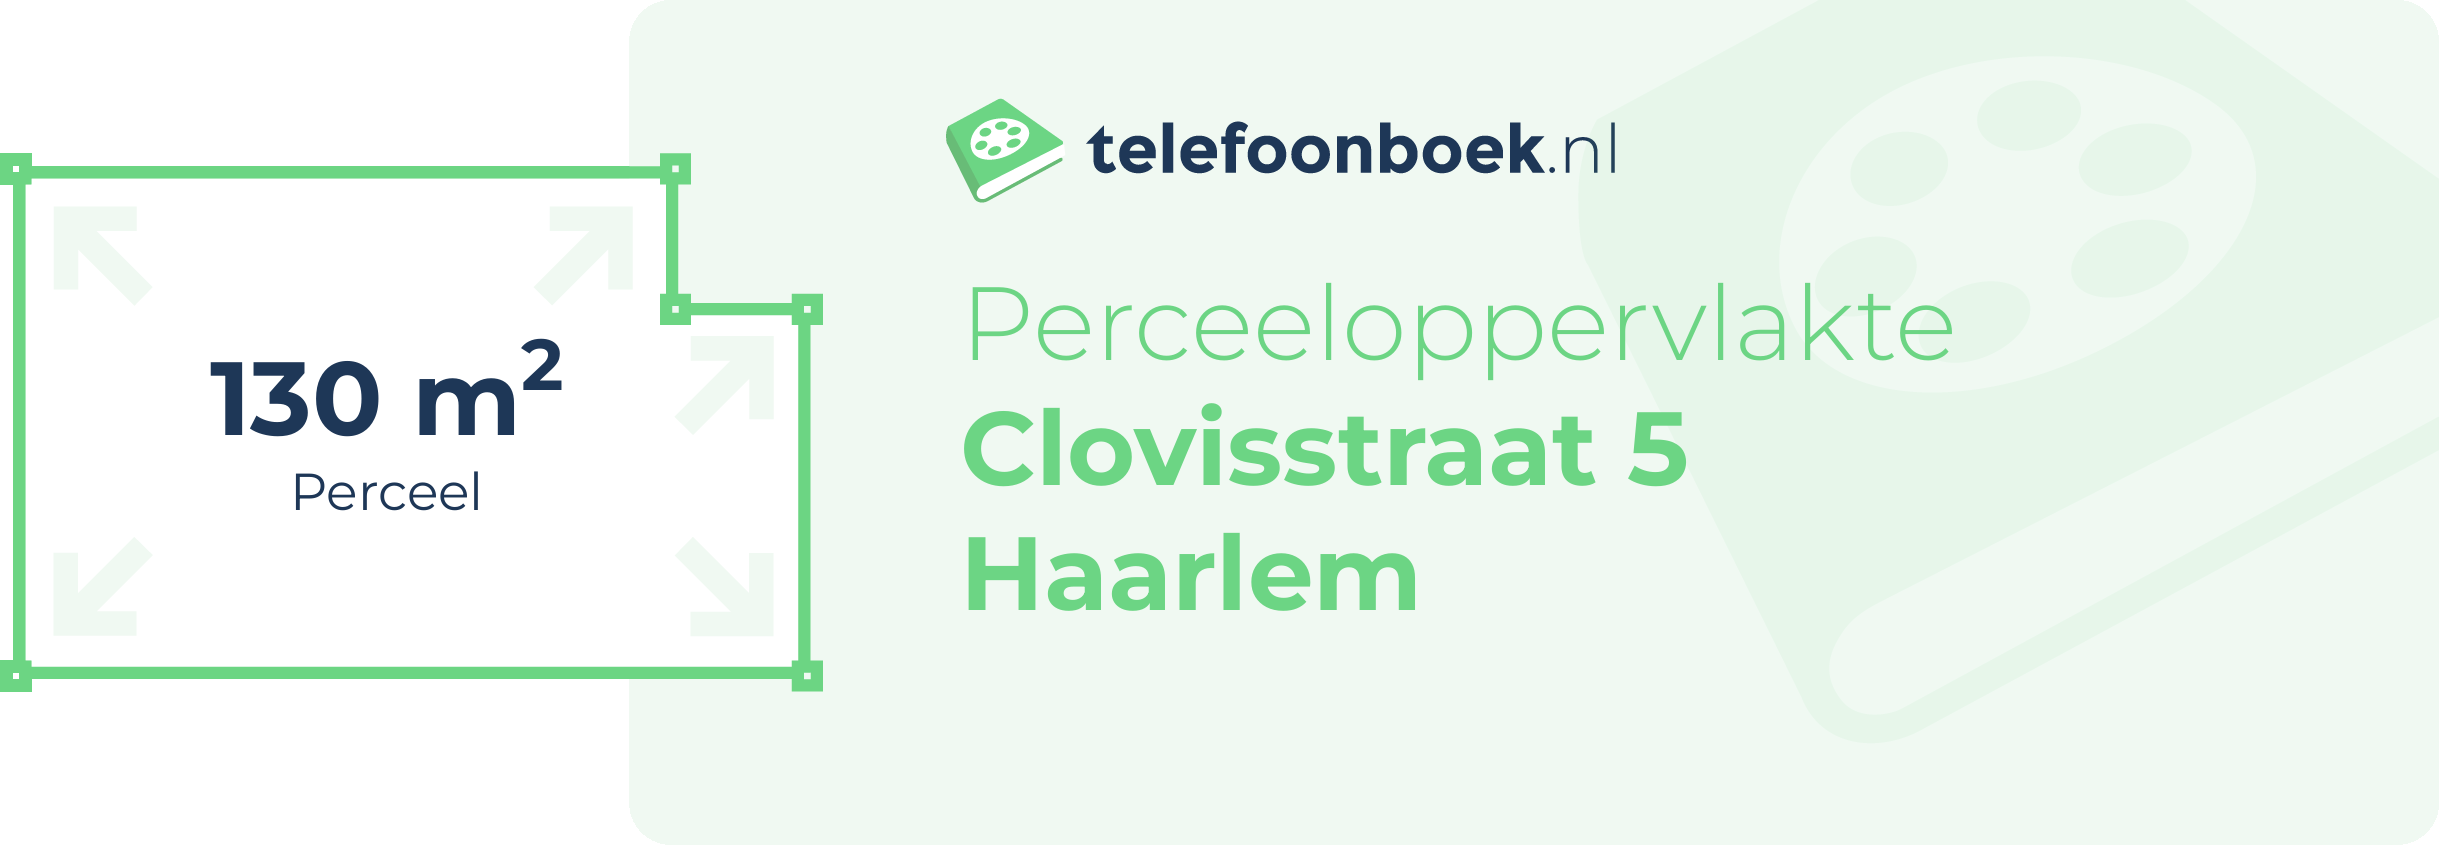 Perceeloppervlakte Clovisstraat 5 Haarlem